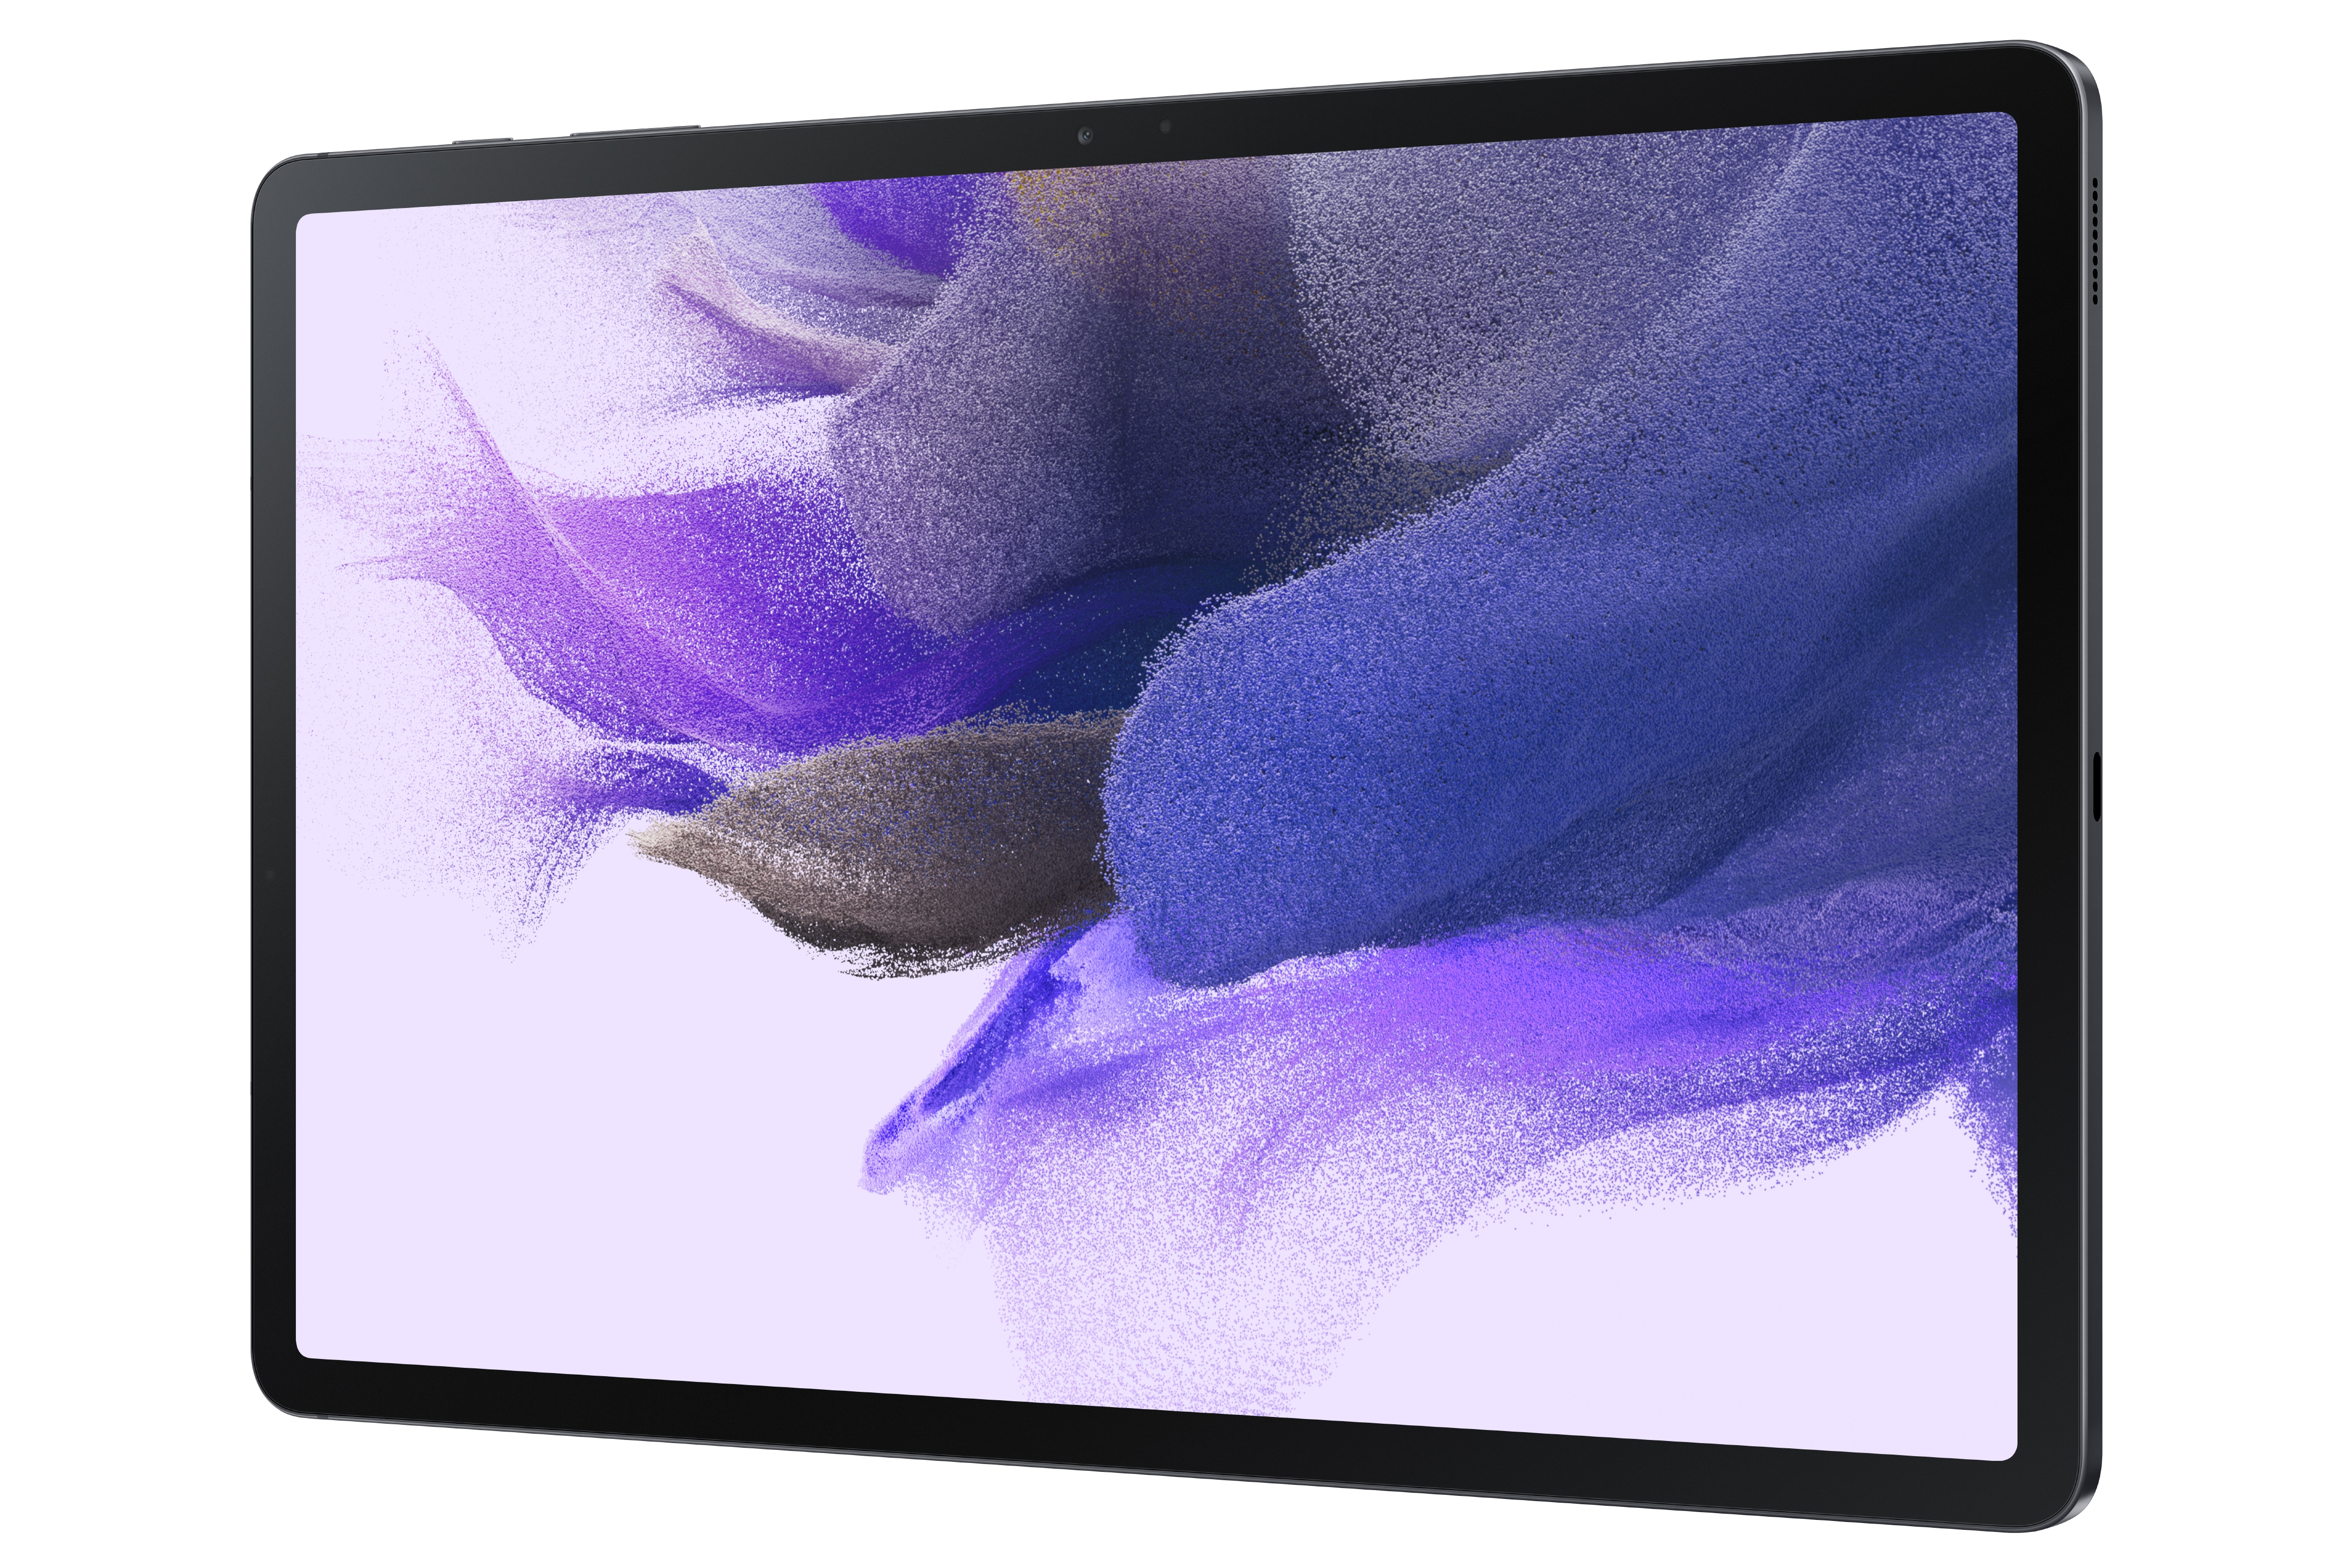 Thumbnail image of Galaxy Tab S7 FE, 64GB, Mystic Black (Wi-Fi)